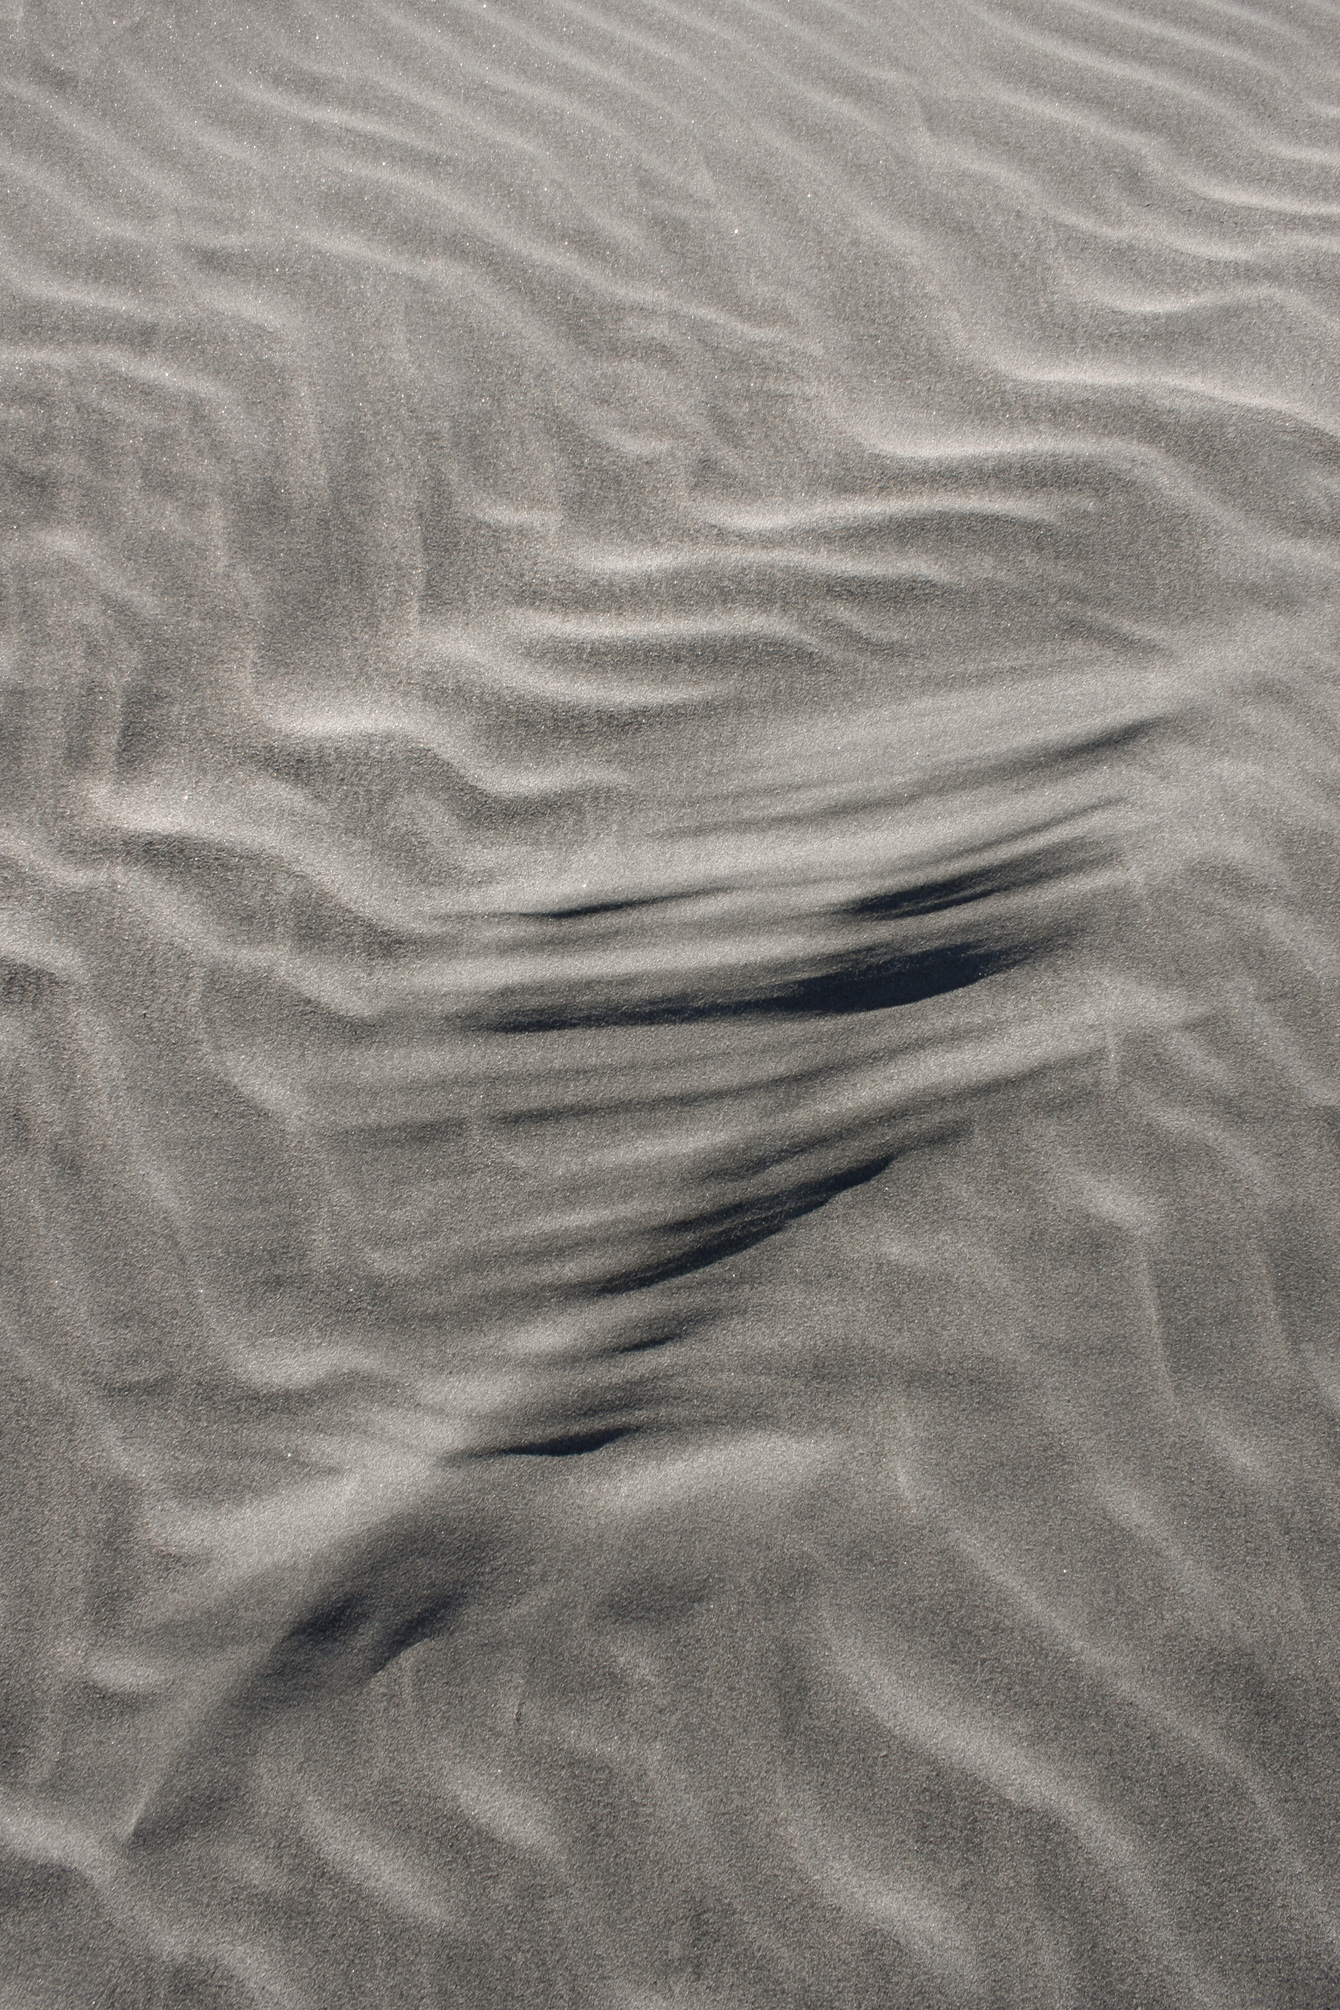 sand-wind-black-nz